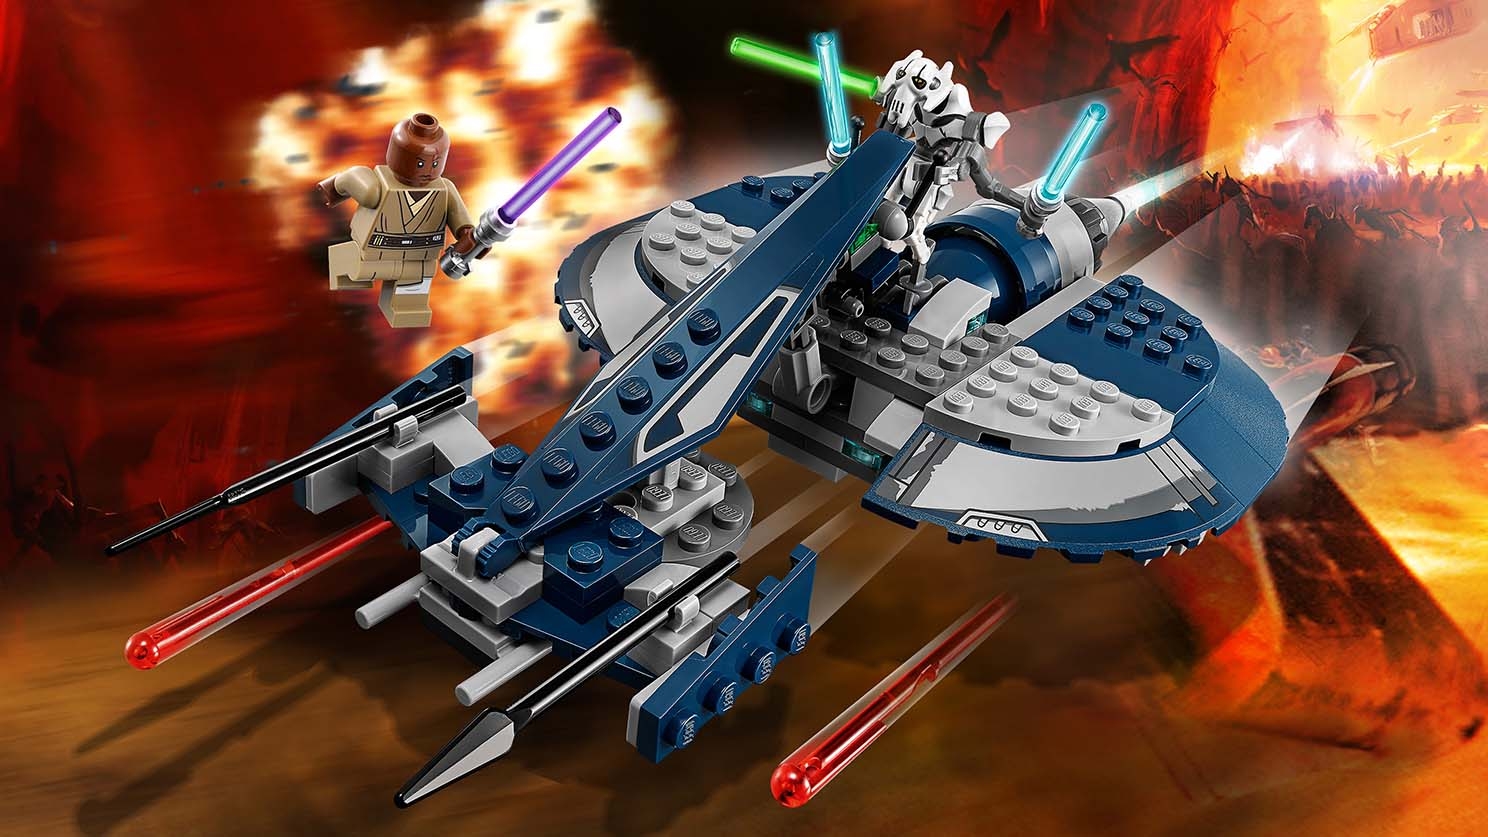 LEGO STAR WARS 75199 General Grievous' Combat Speeder NEW